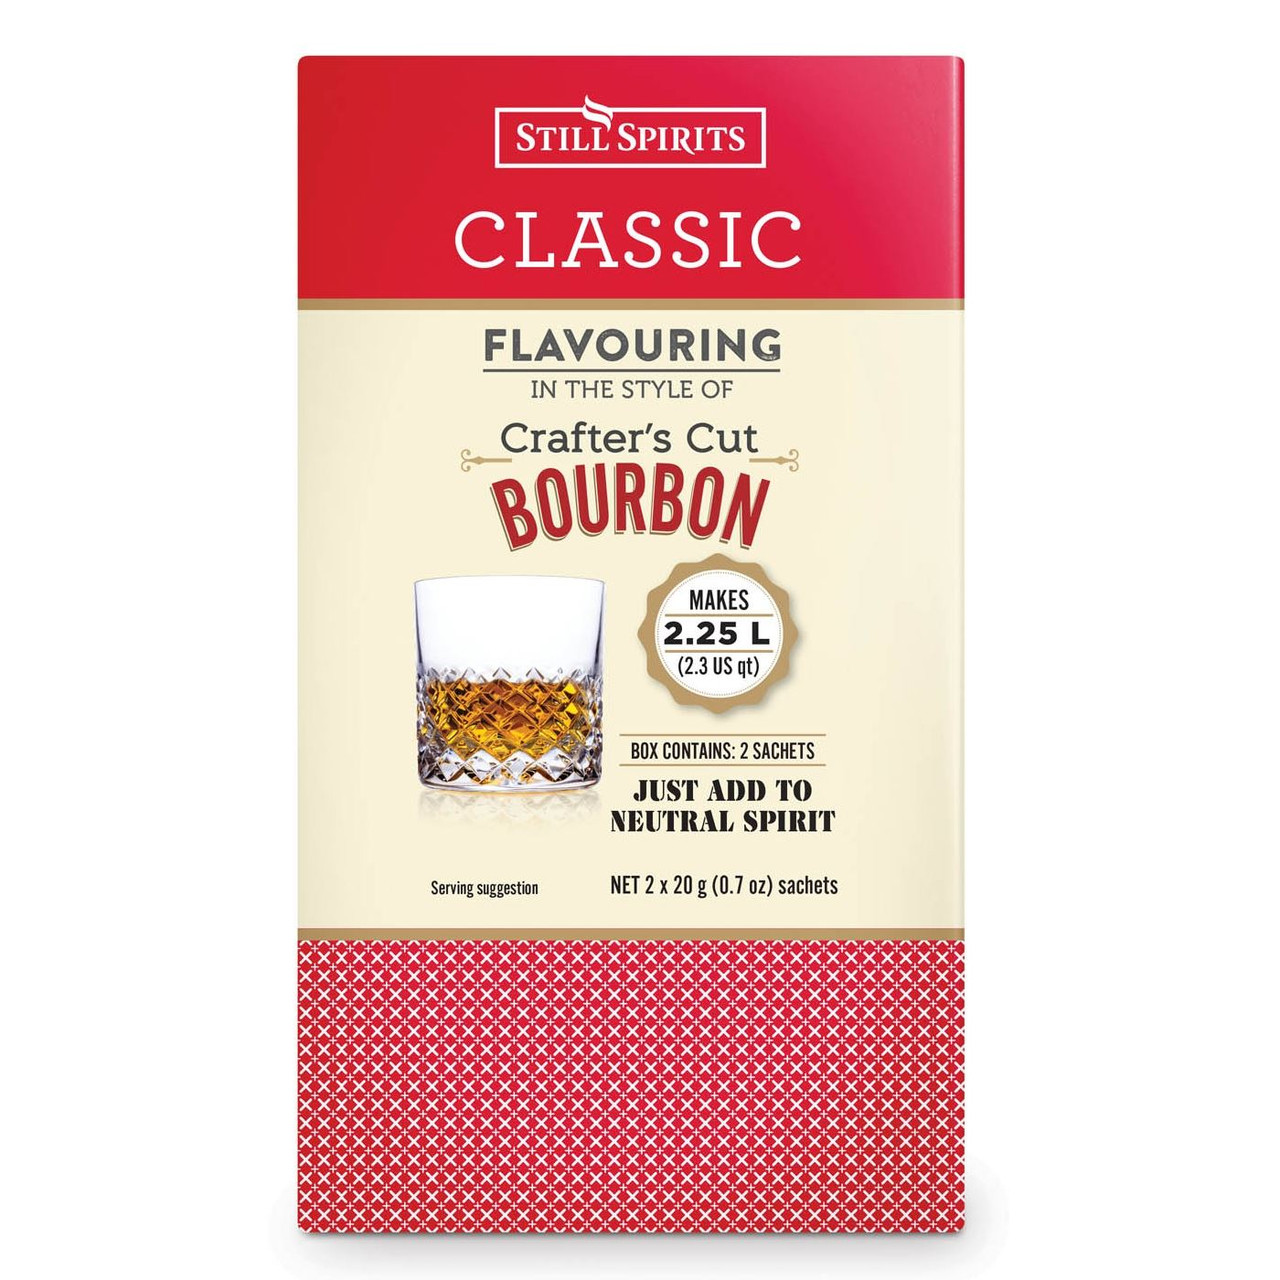 Still Spirits Classic Crafters Cut Bourbon Kentucky Style Essence Makes 2.25L BBE 04/2024